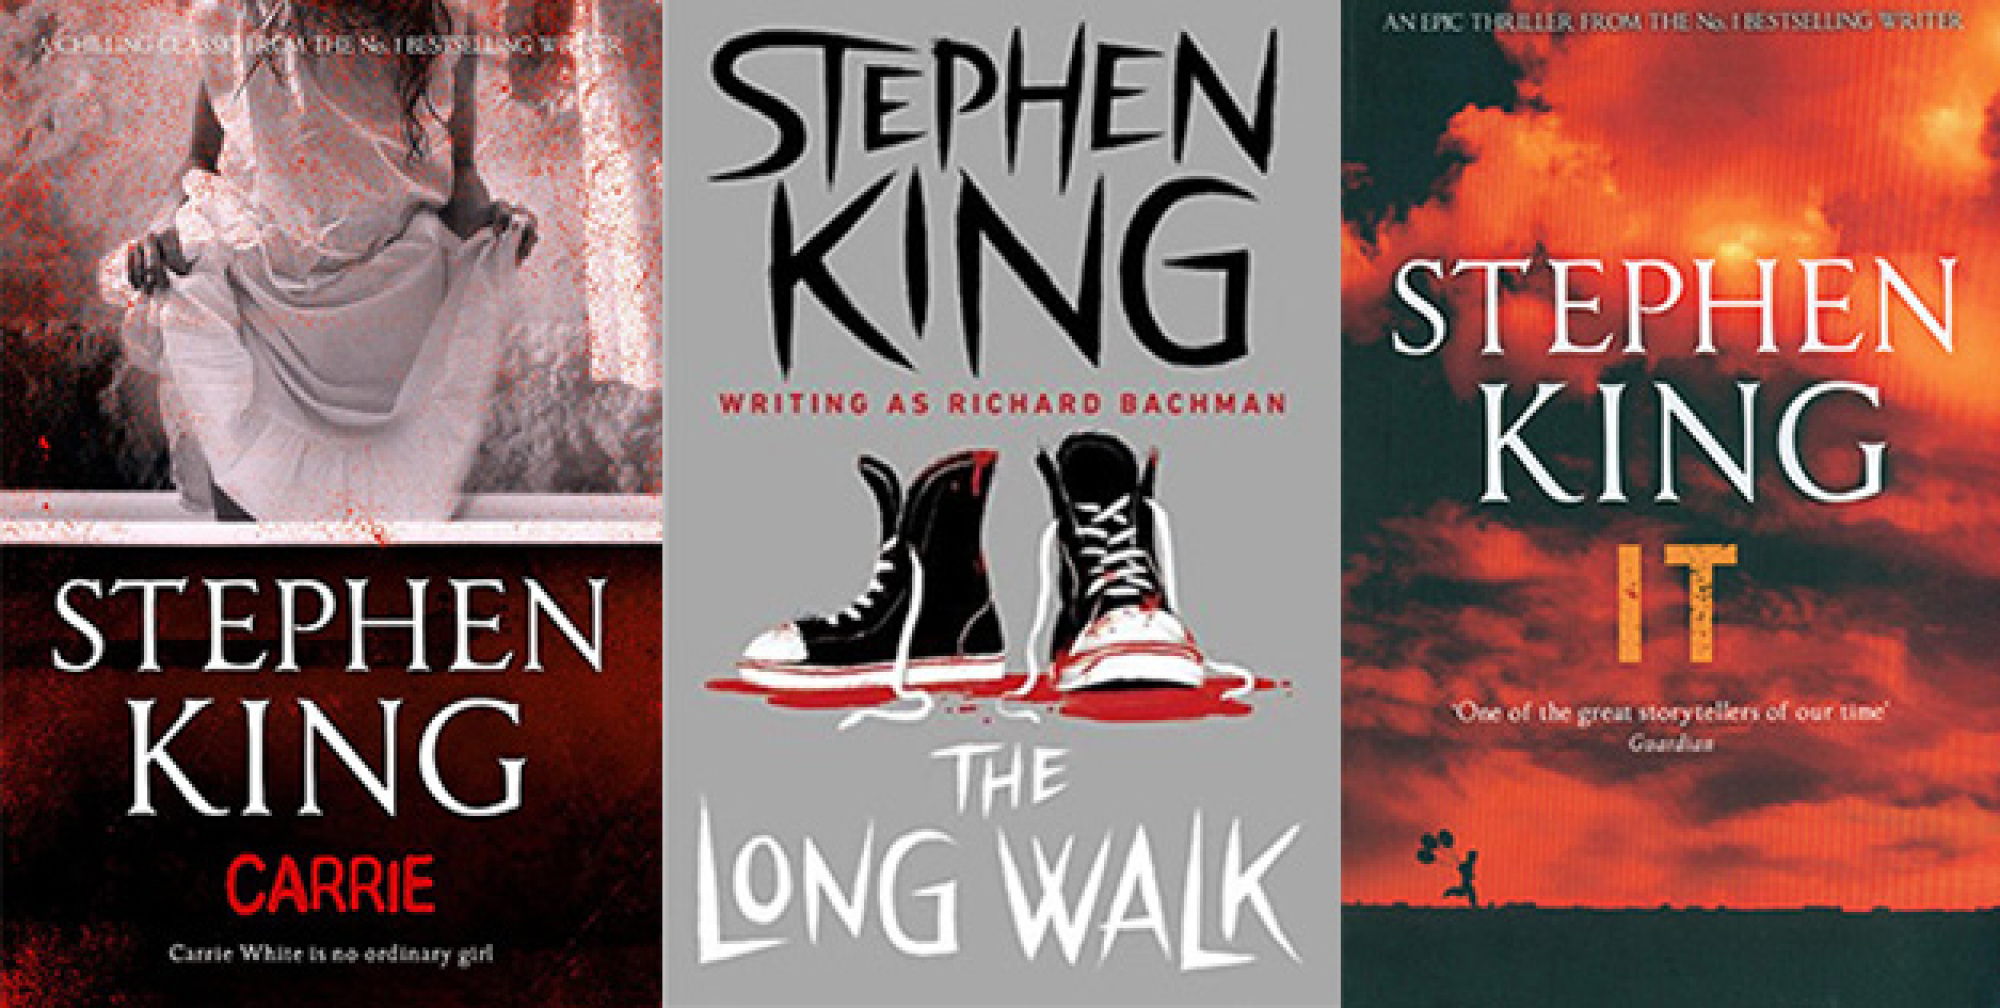 Can I read Stephen King books if I prefer psychological thrillers?